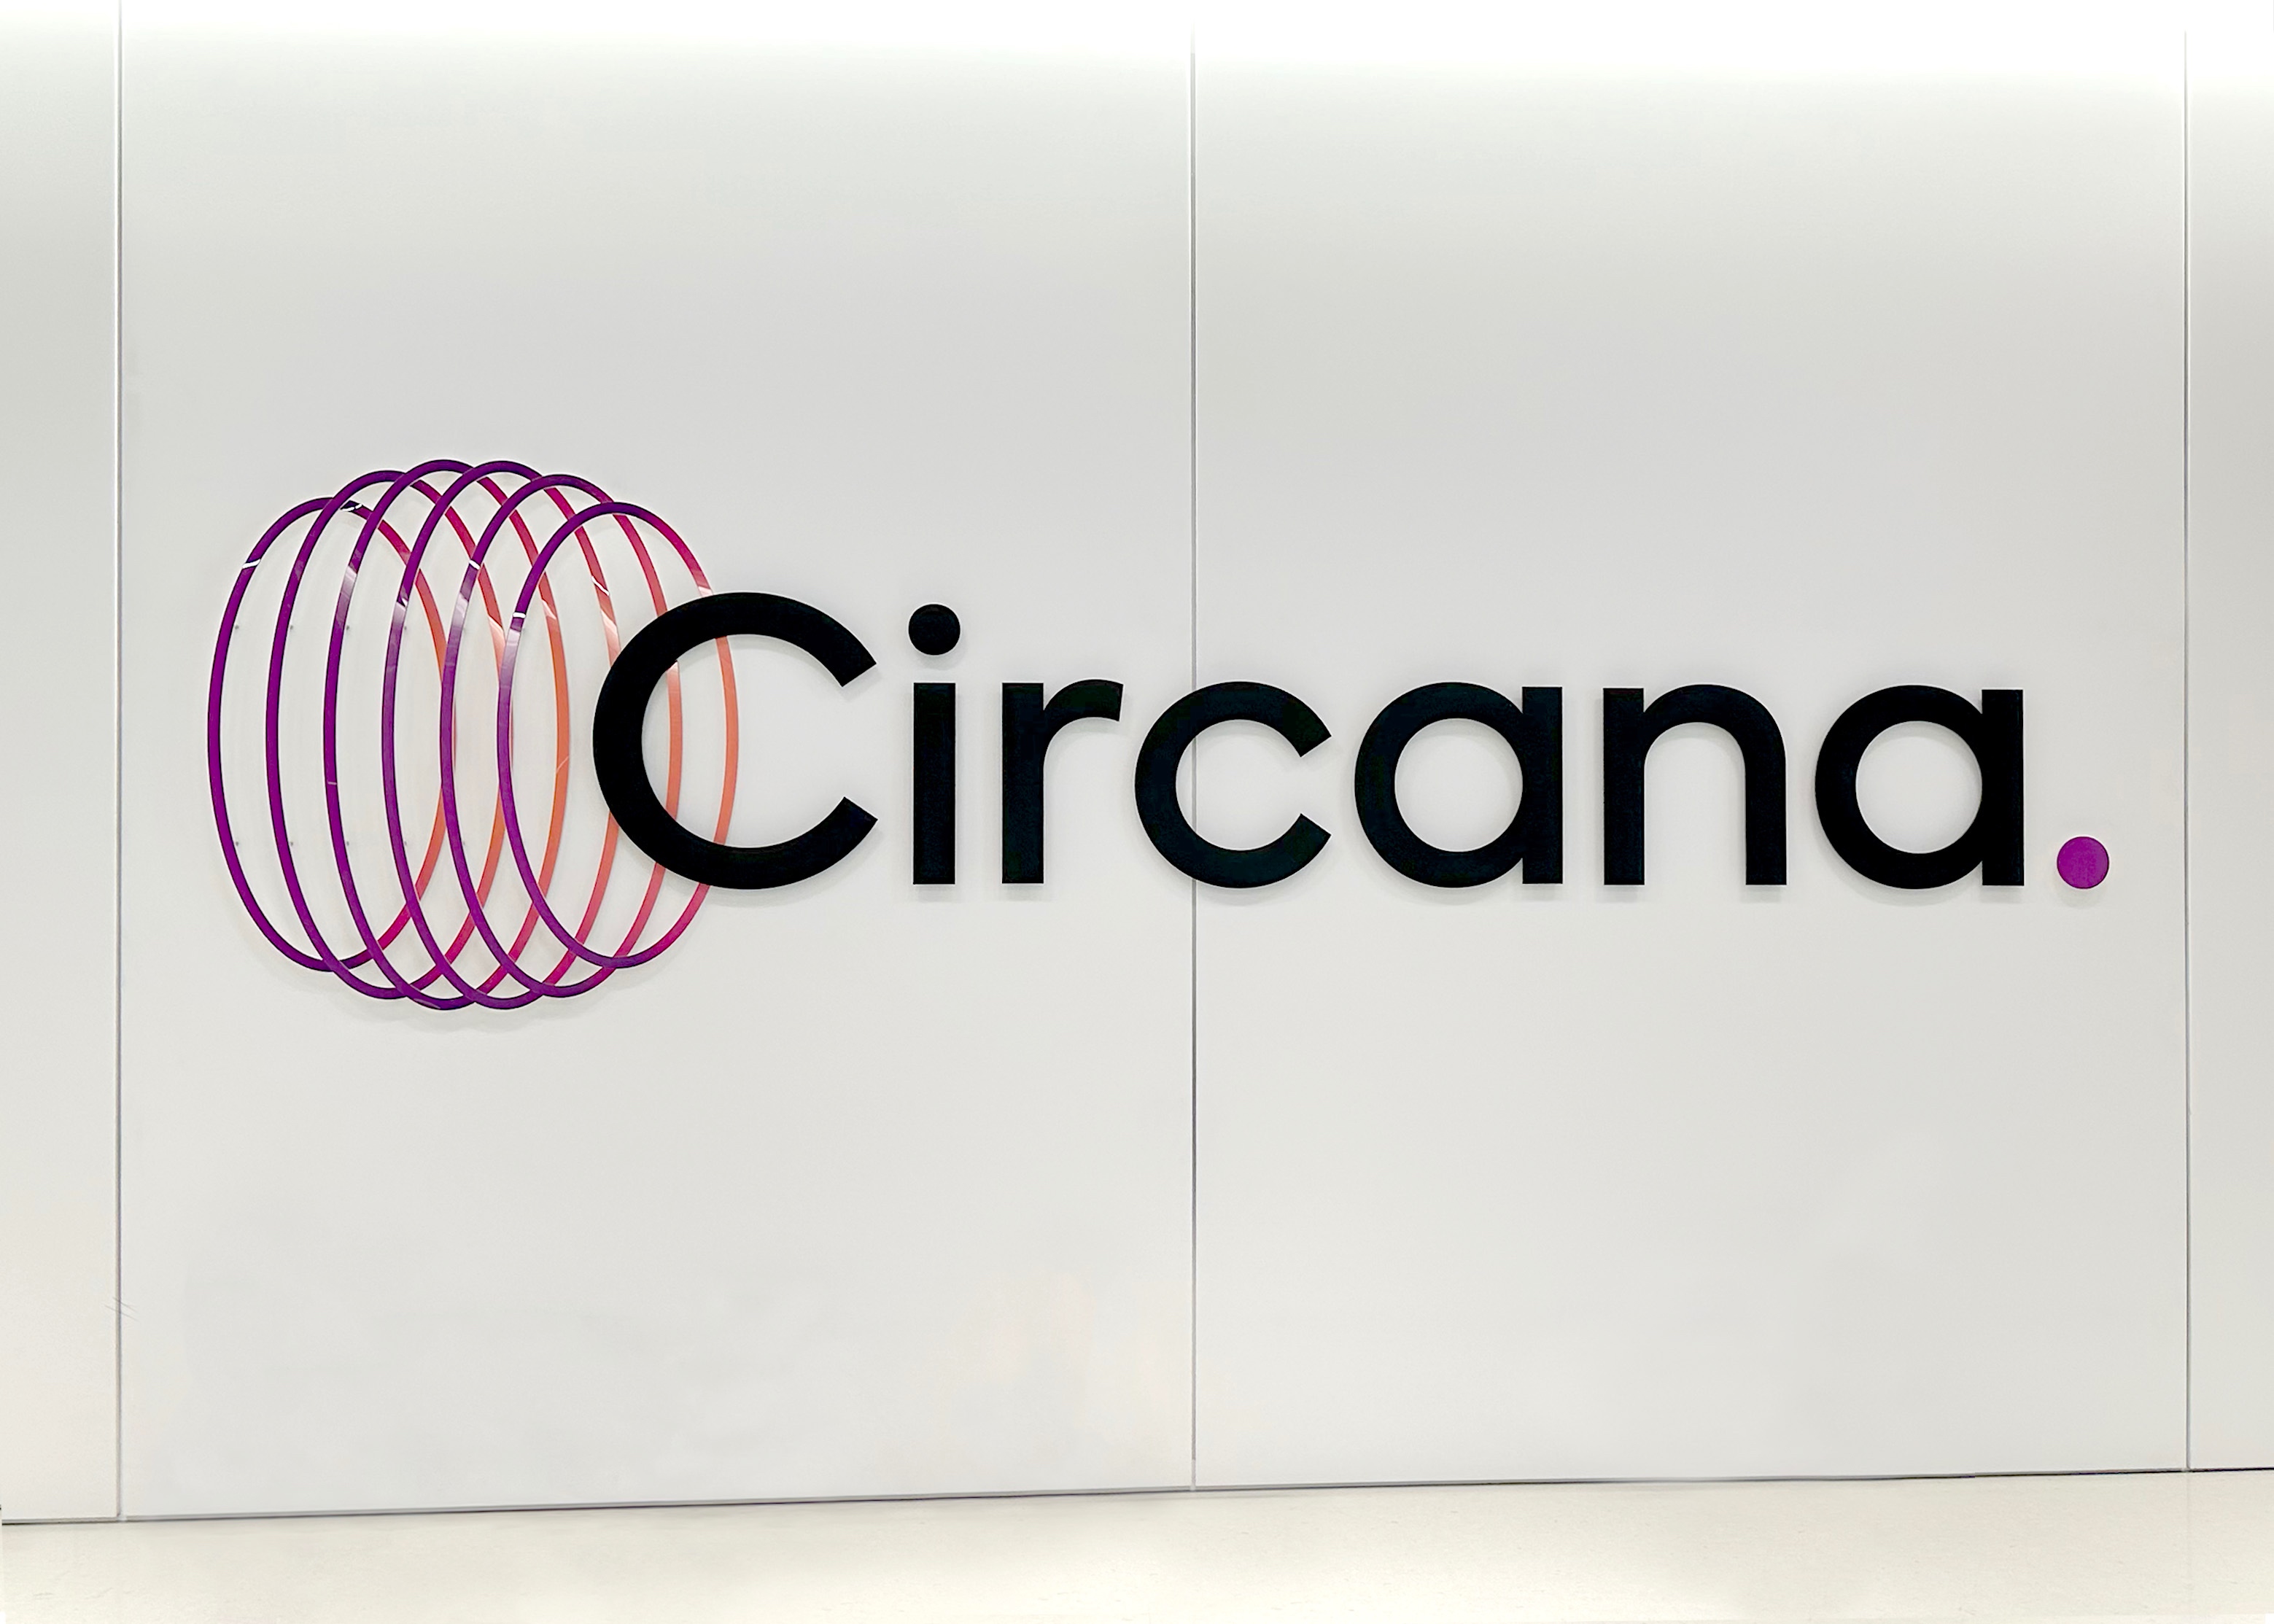 Becoming Circana: IRI and NPD’s Exciting Rebrand